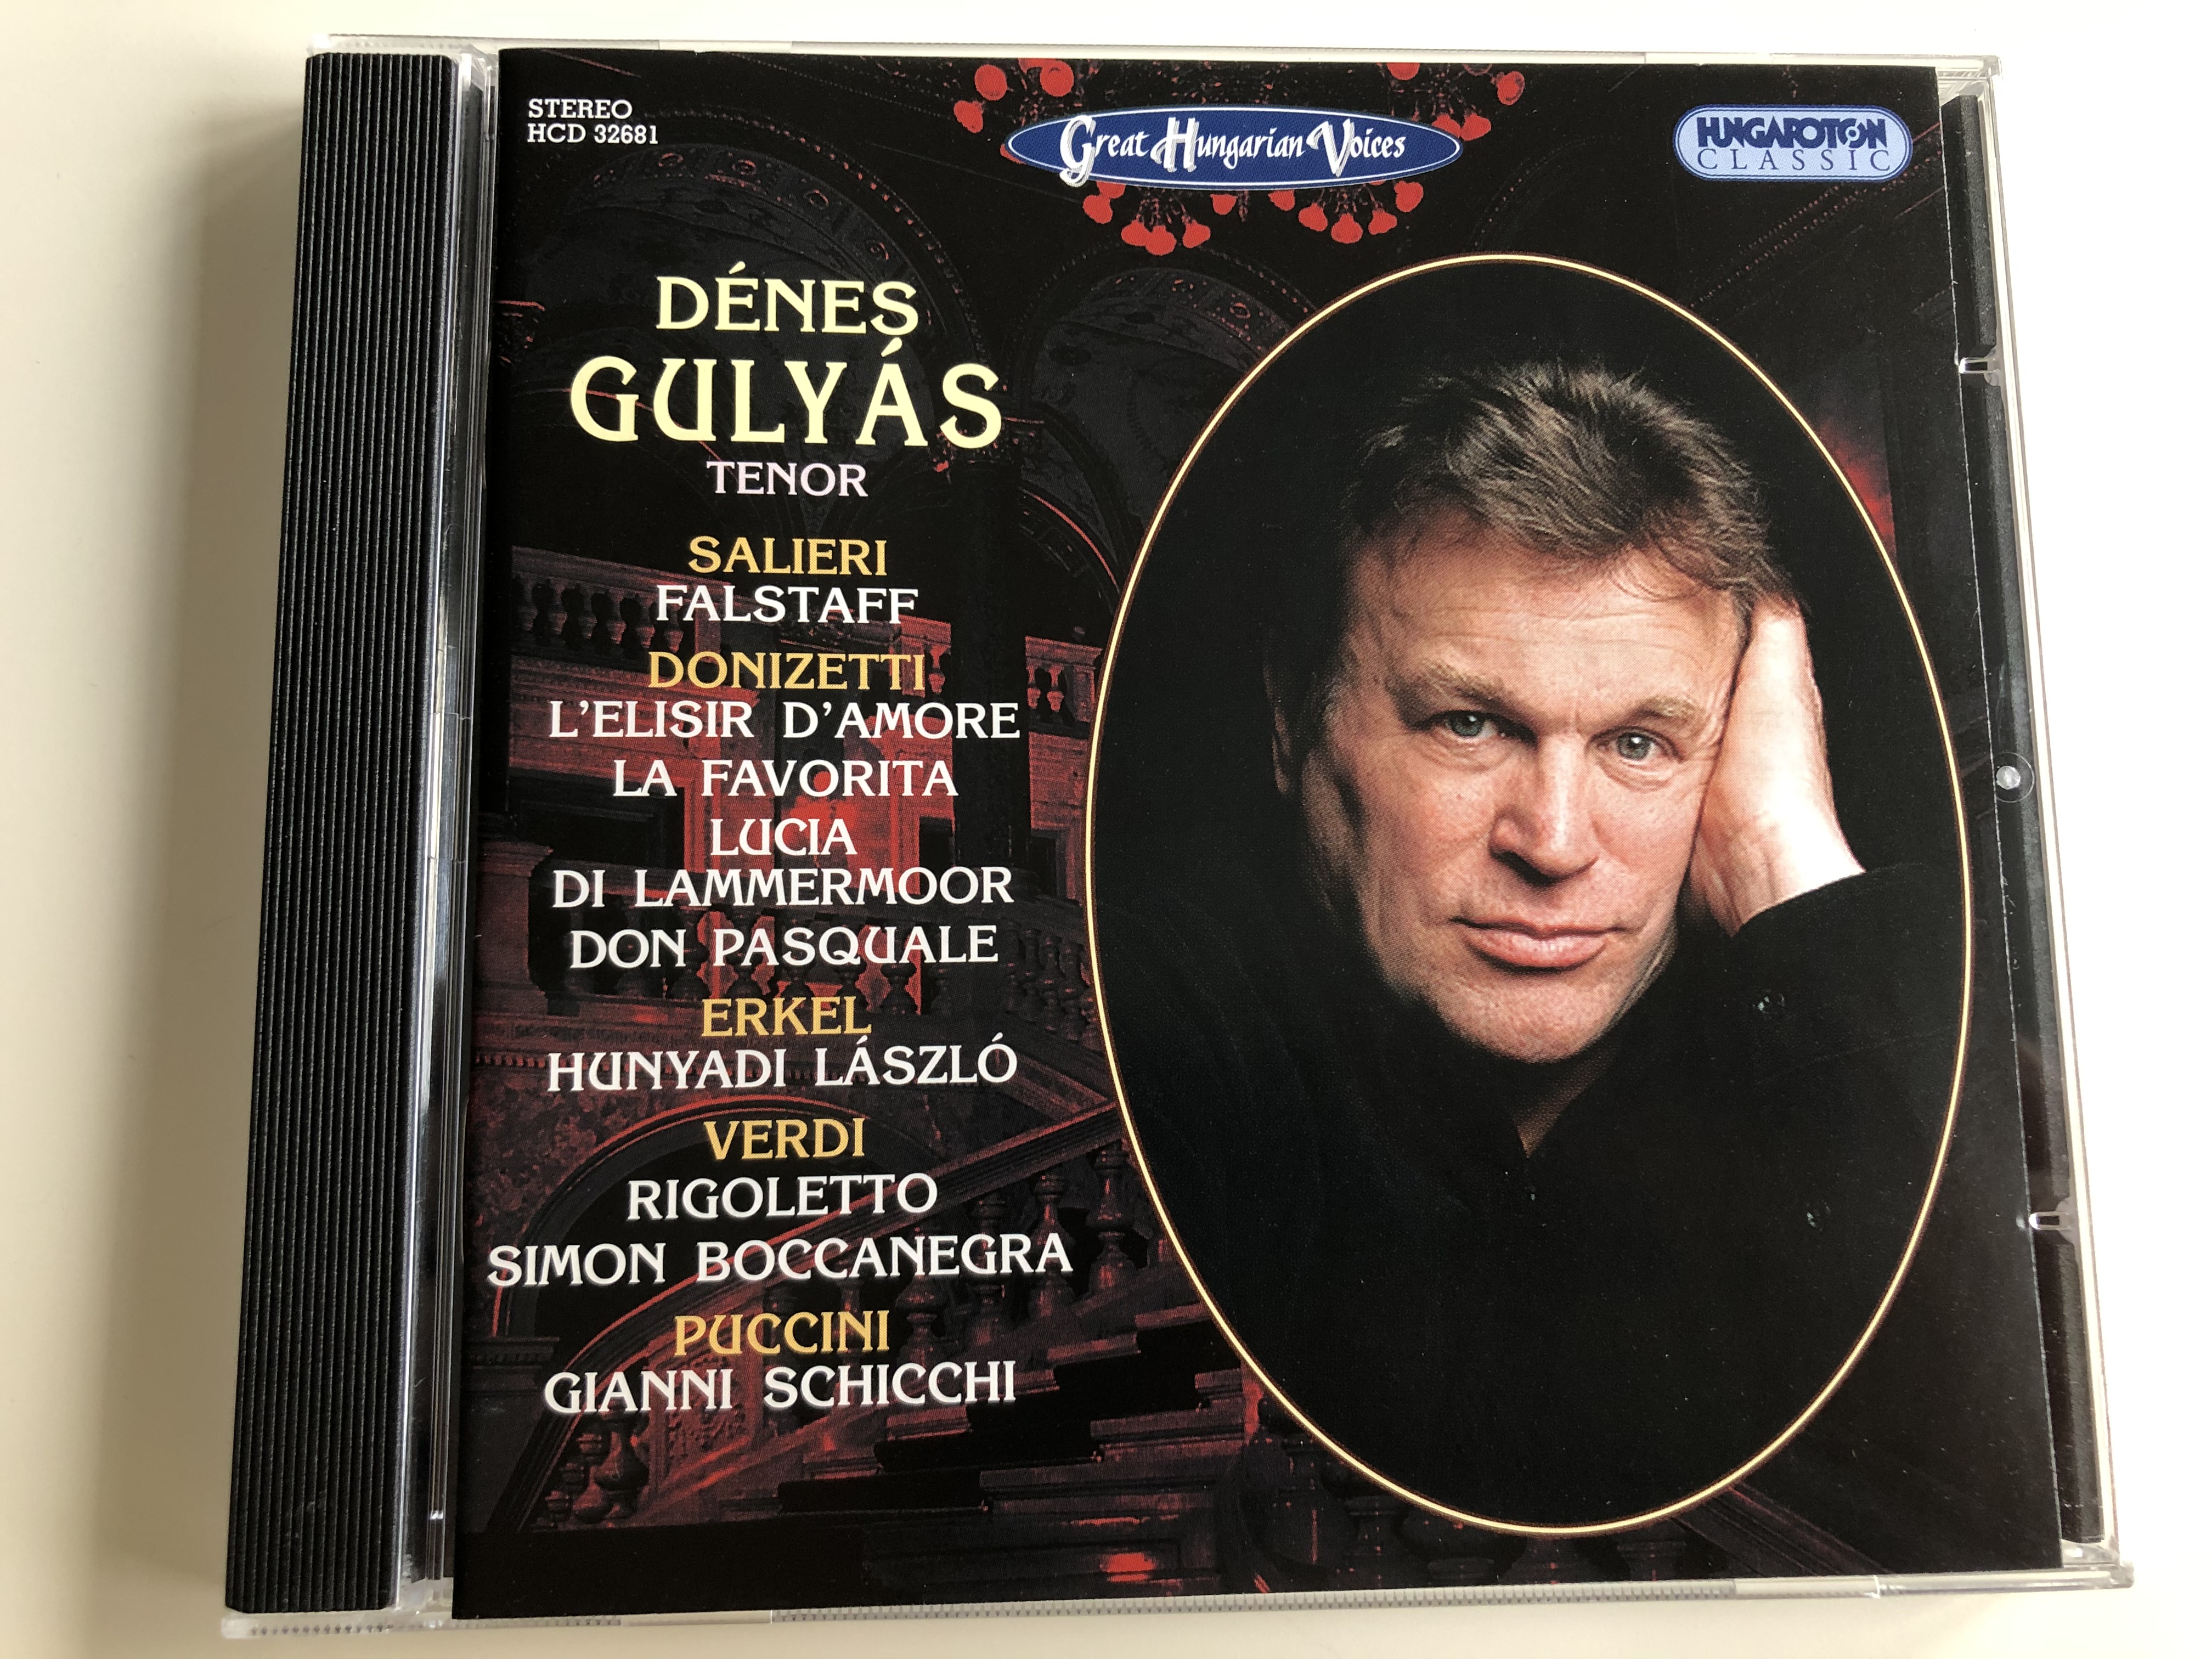 d-nes-guly-s-tenor-great-hungarian-voices-salieri-donizetti-erkel-verdi-puccini-audio-cd-2010-hungaroton-classic-hcd-32681-5991813268129-.jpg